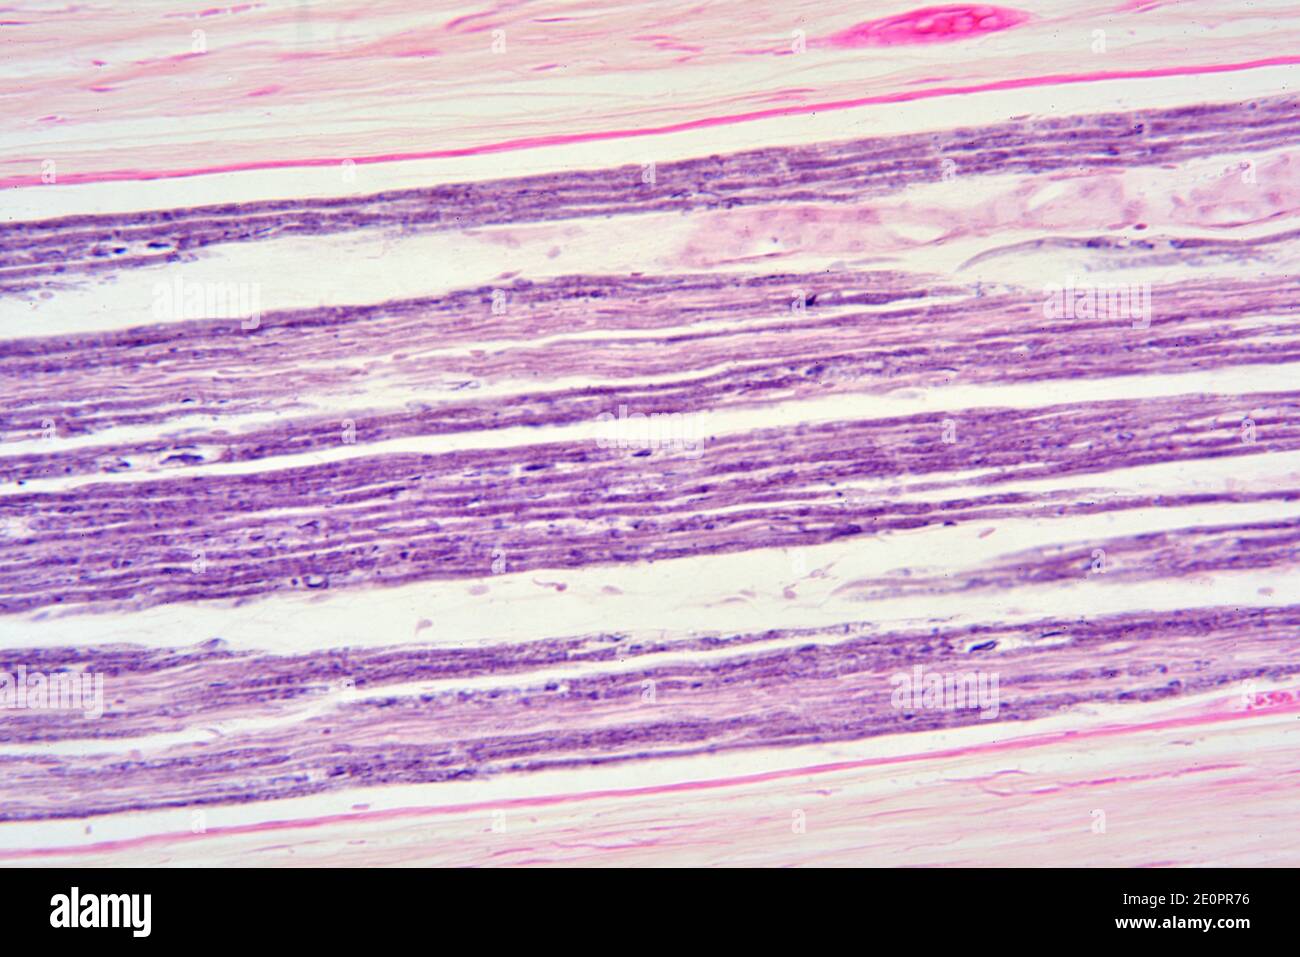 Human sciatic nerve or ischiadic nerve. X75 at 10 cm wide. Stock Photo